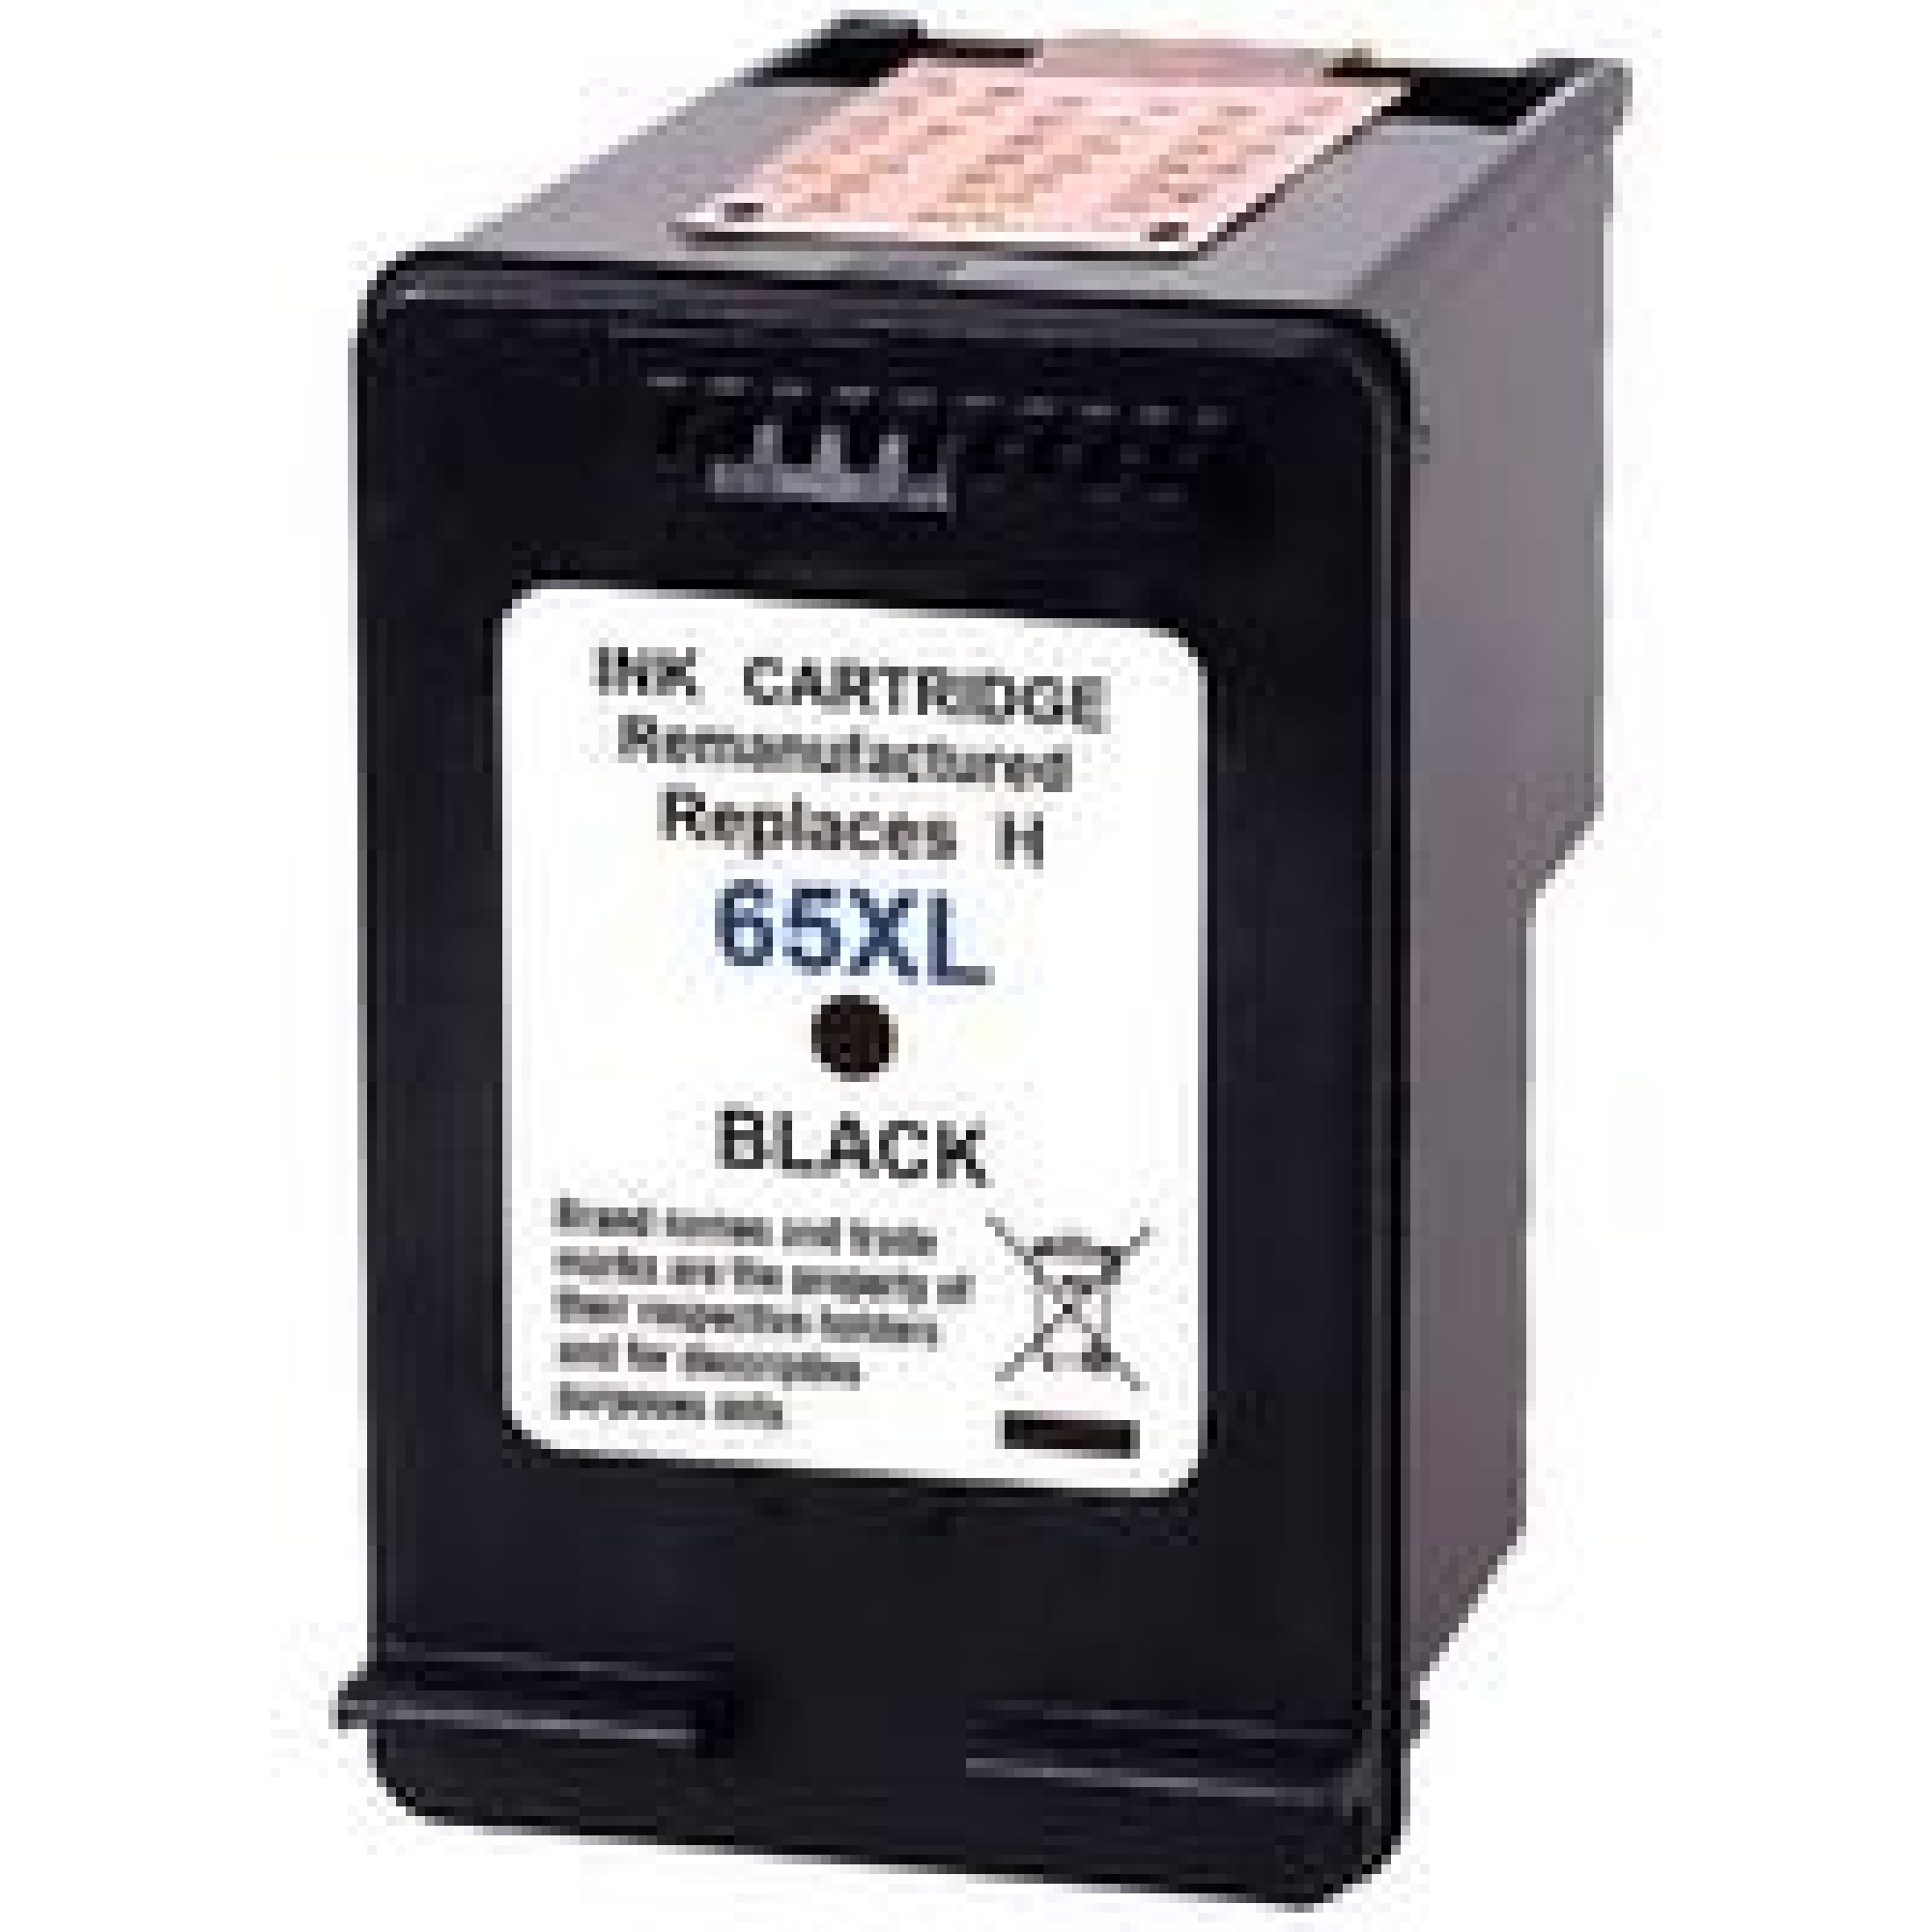 HP 65xl HP65xl Black Ink Cartridge Compatible